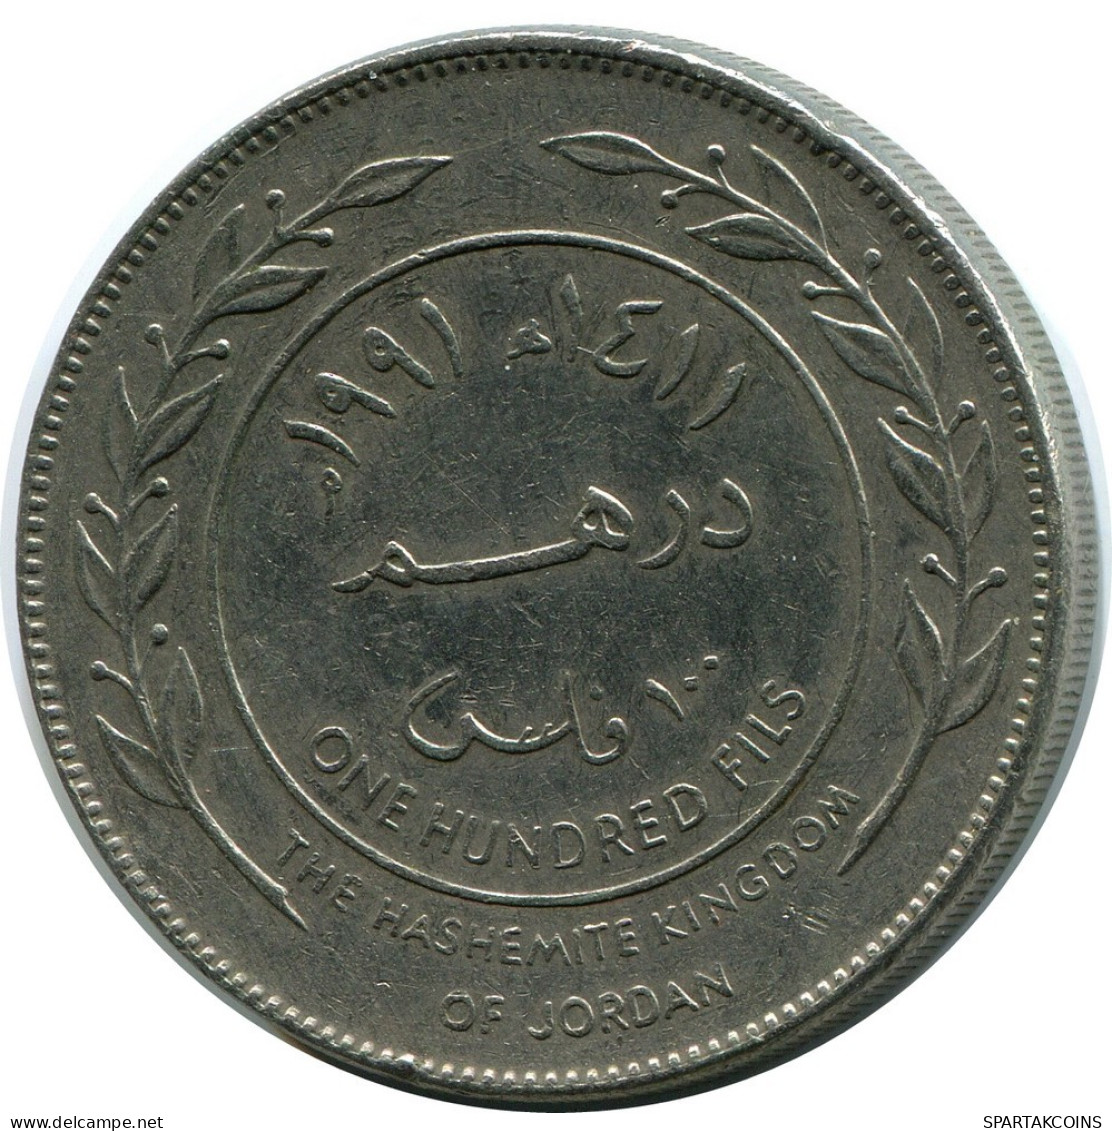 1 DIRHAM / 100 FILS 1991 JORDAN Coin #AP103.U.A - Giordania